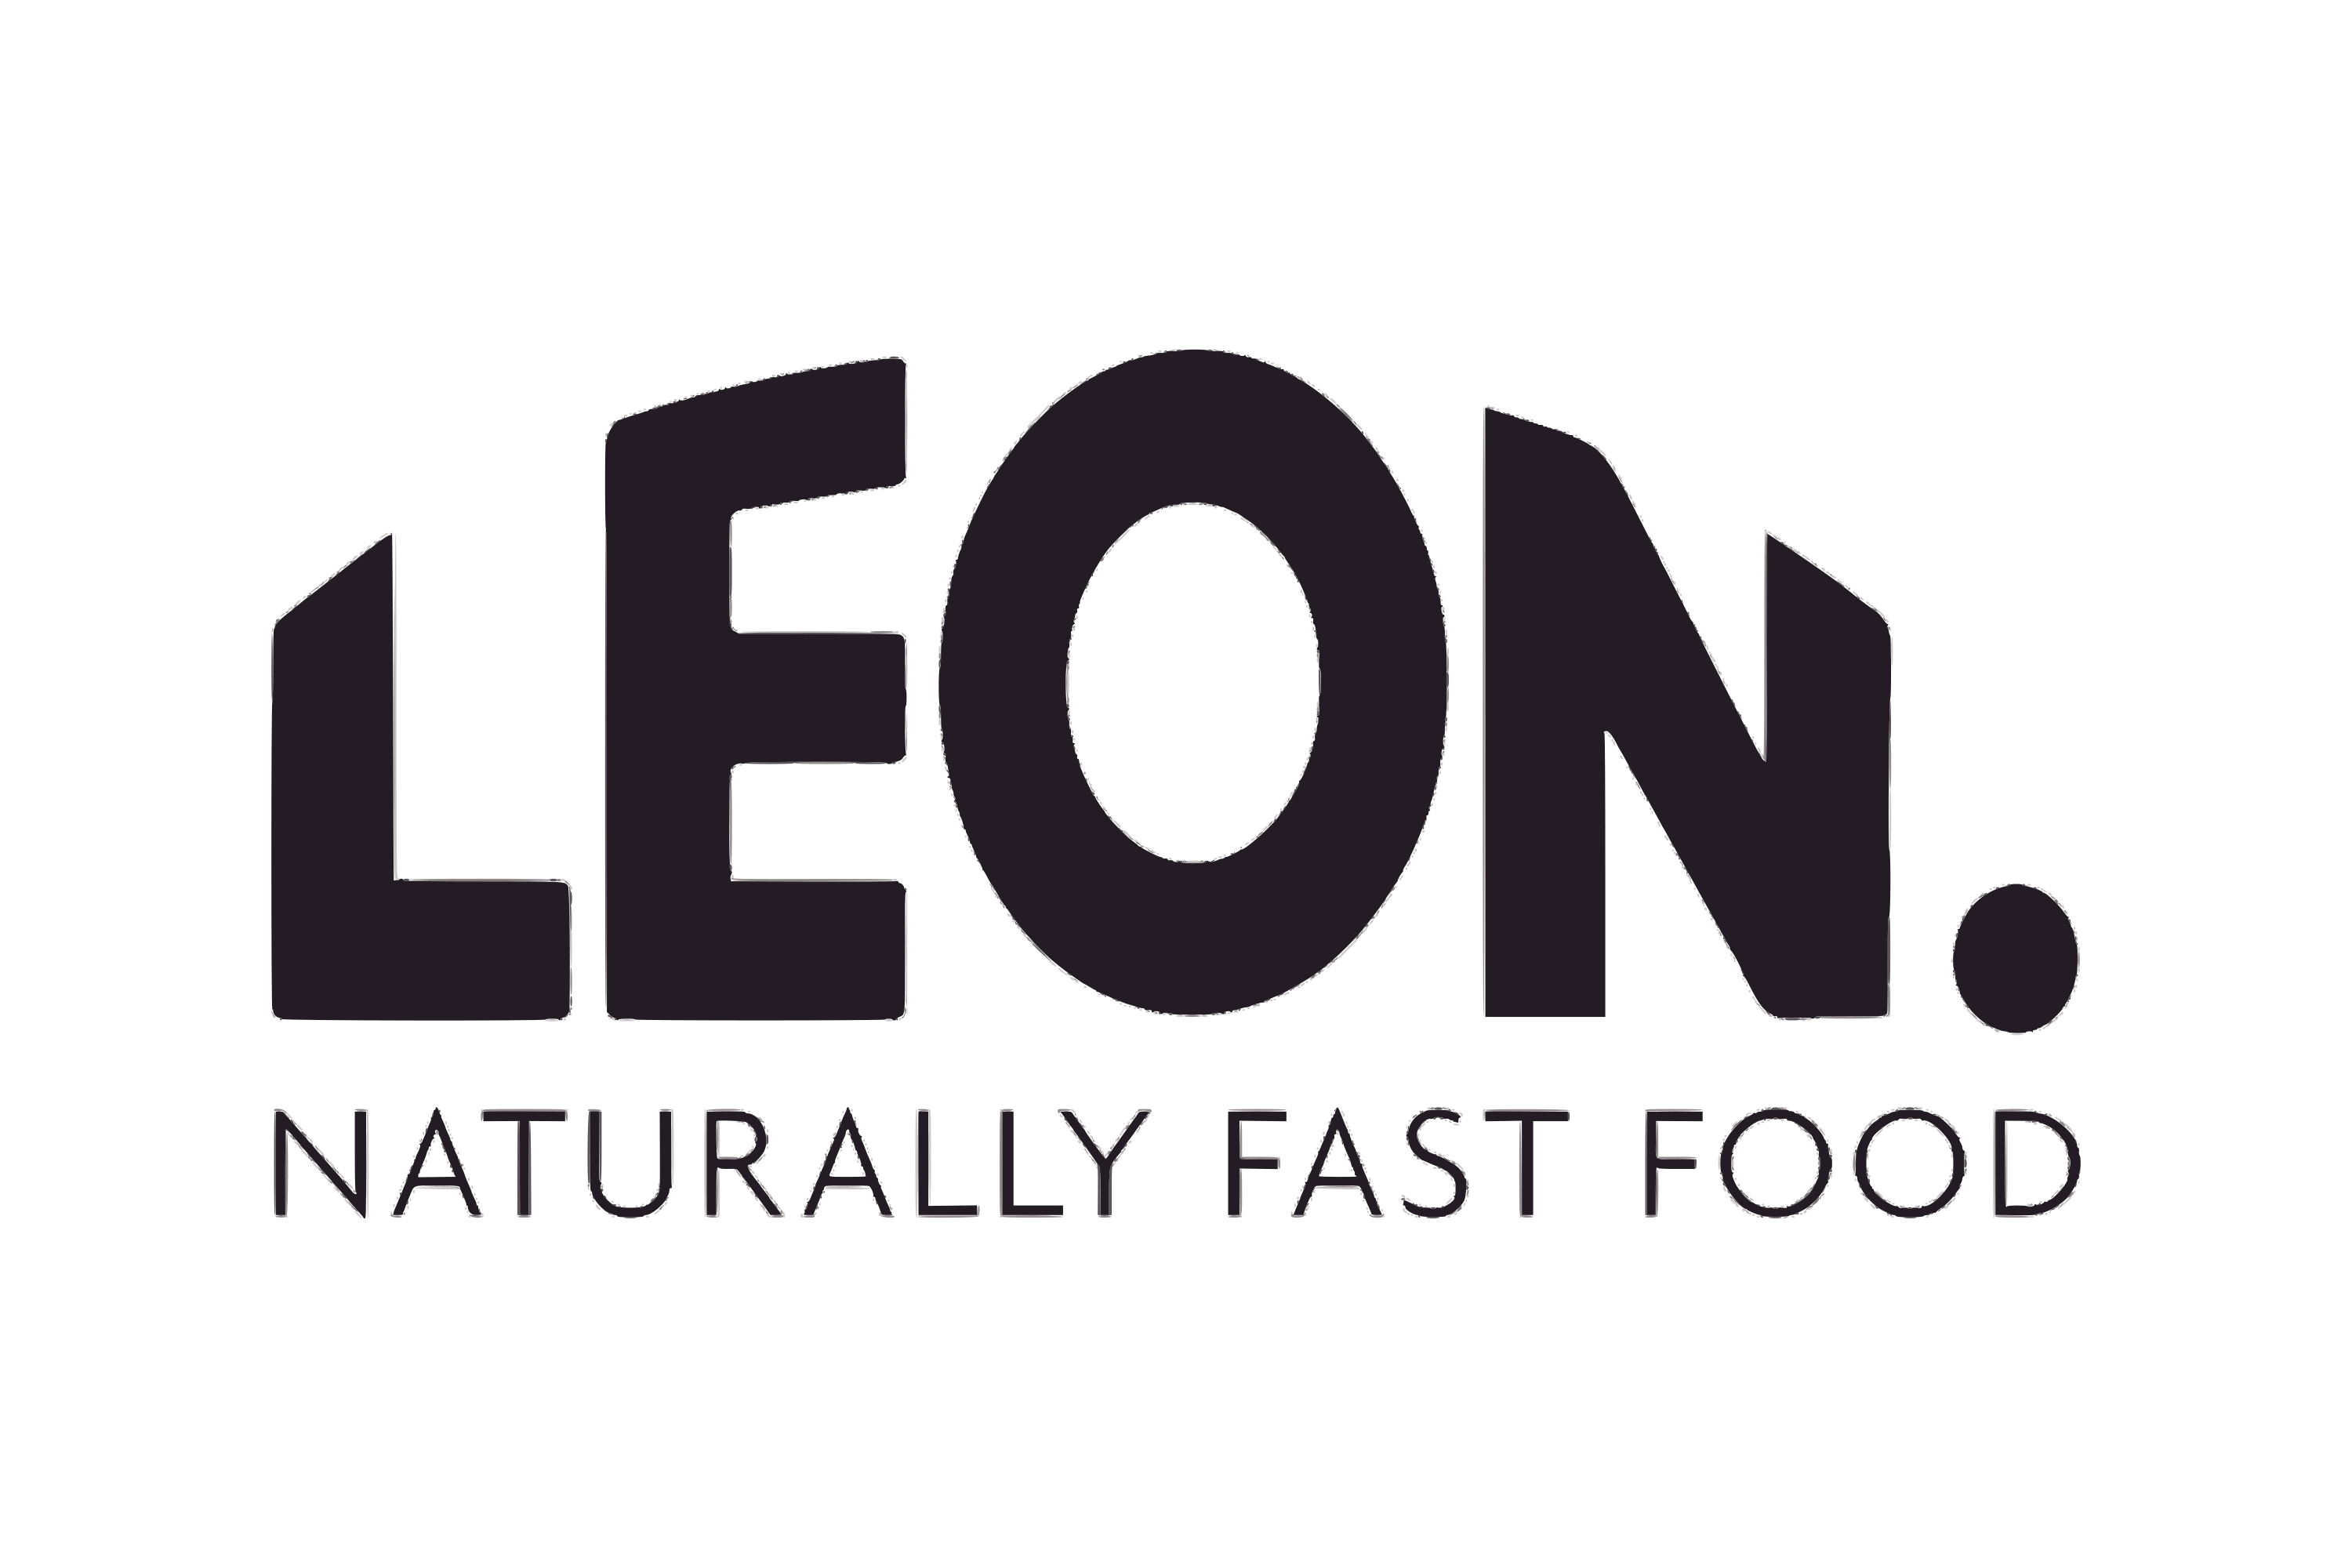 Leon Restaurants Logo